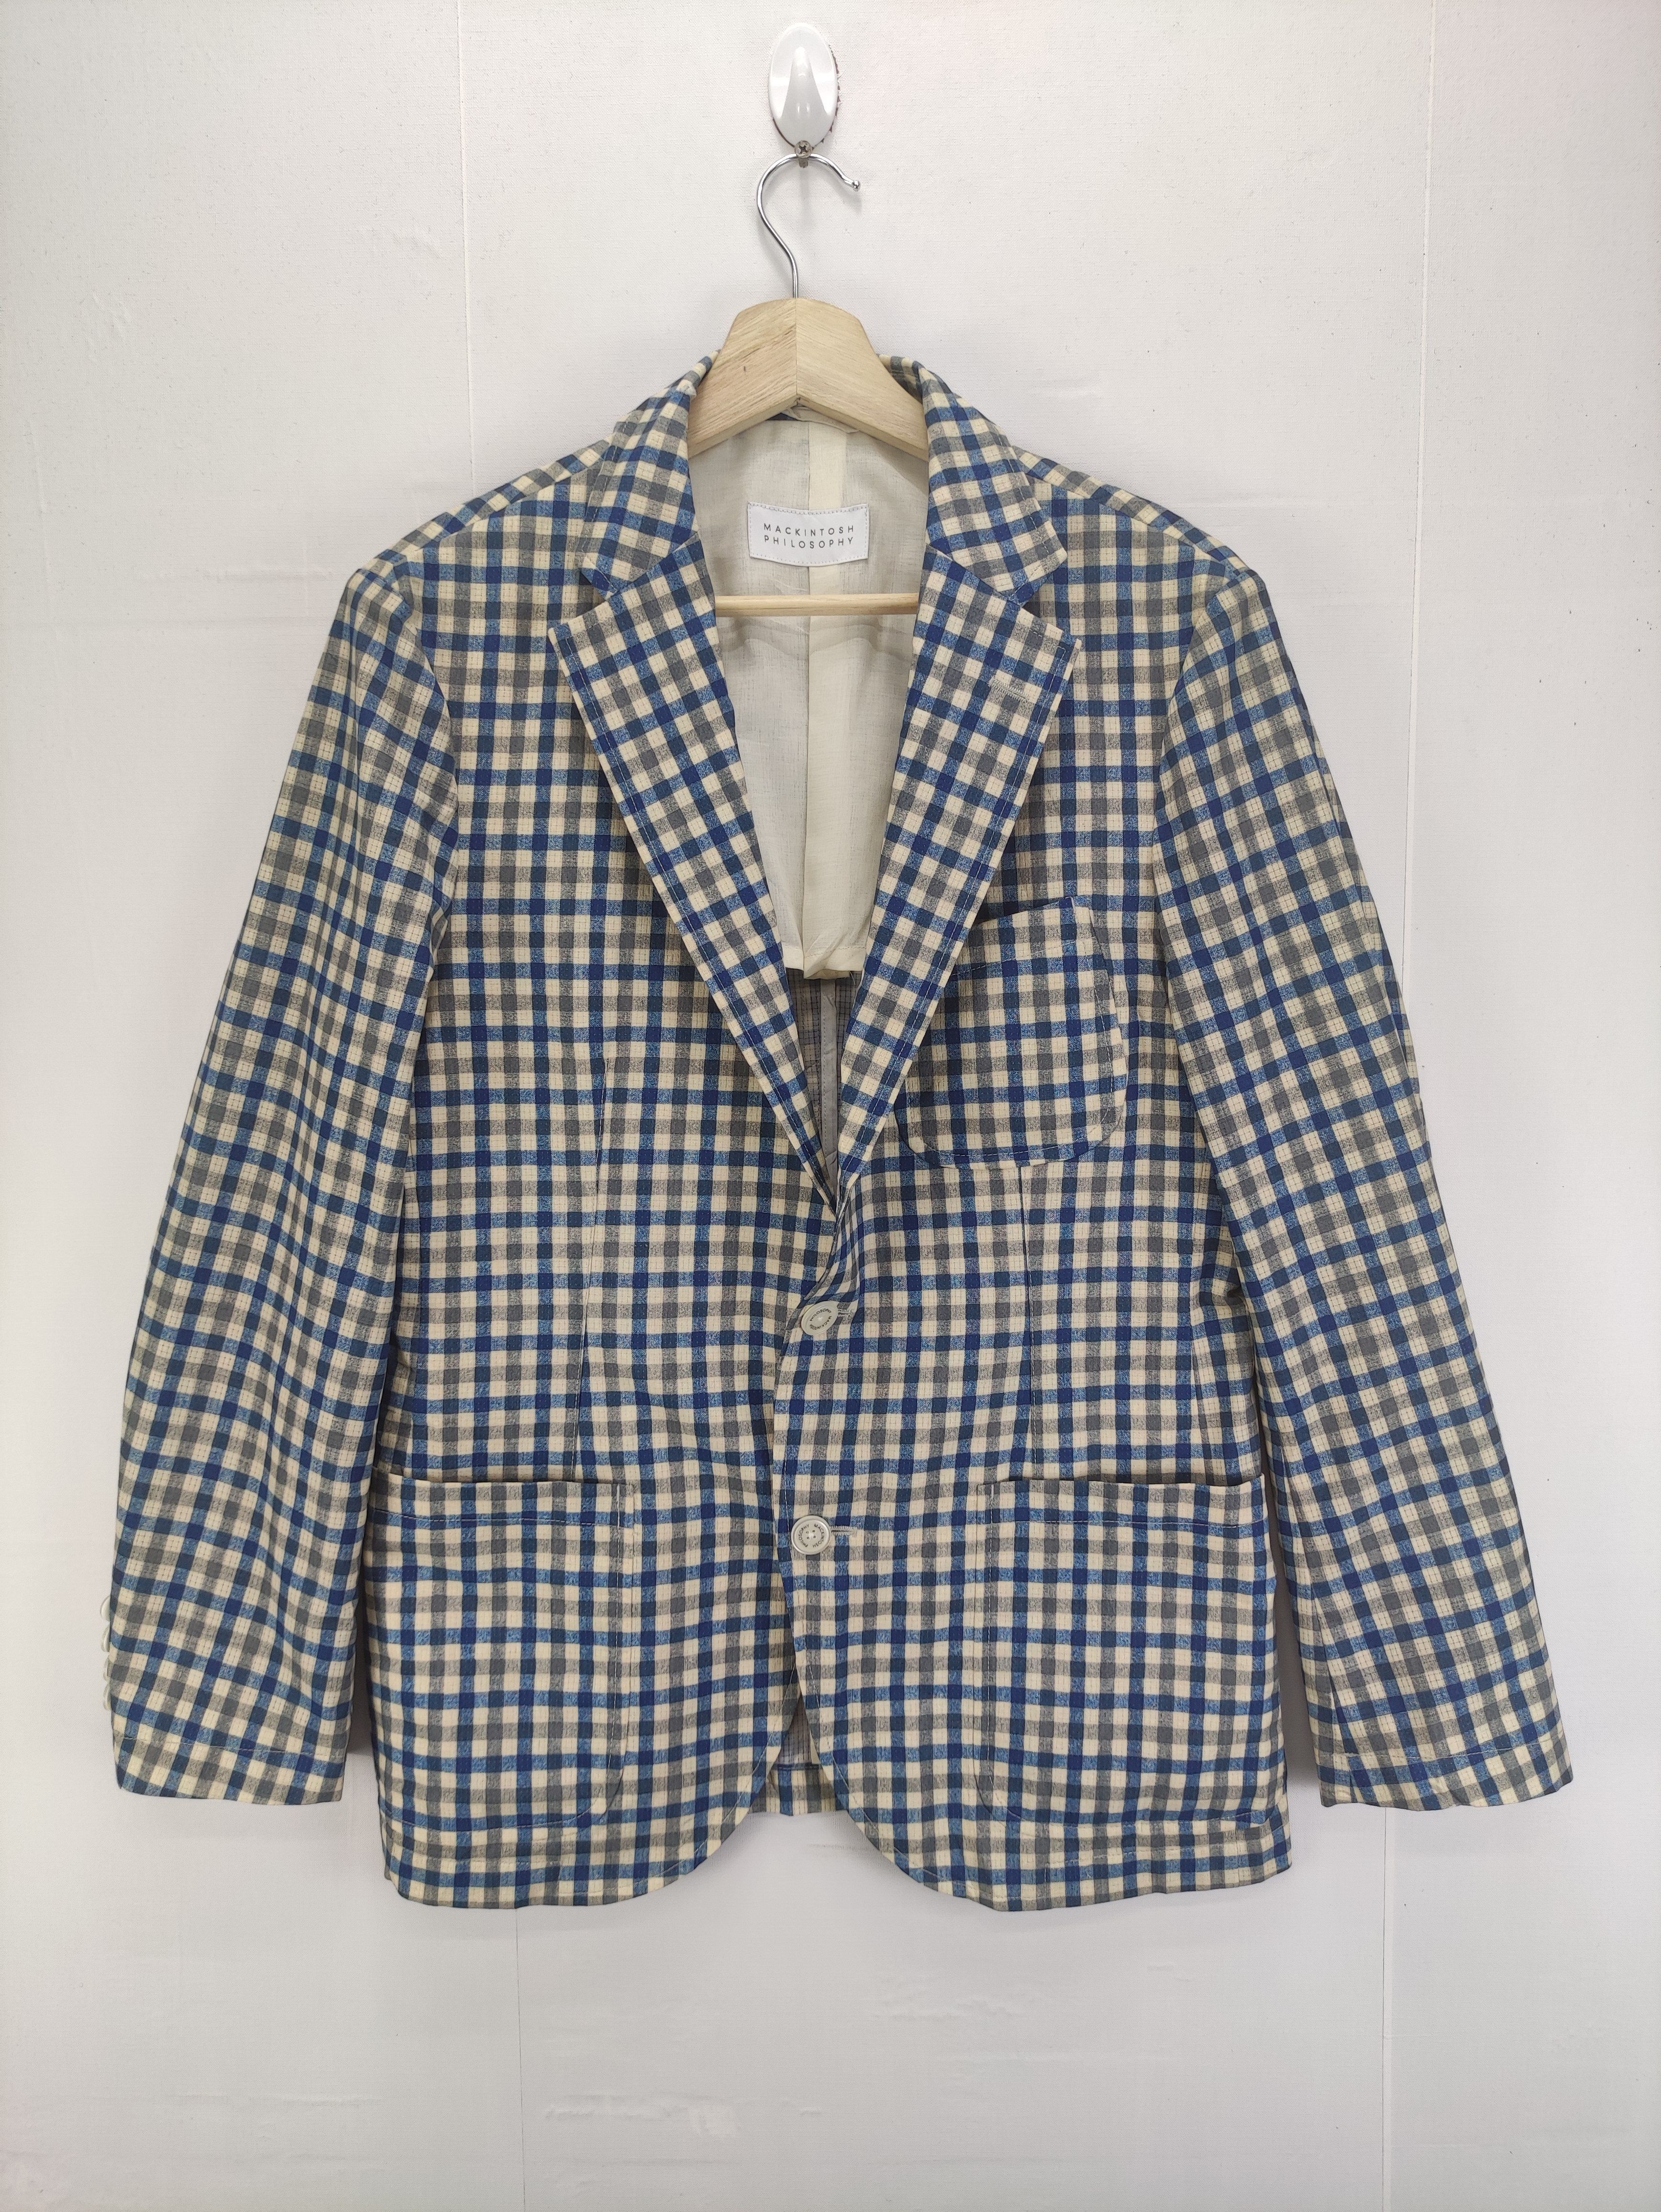 Mackintosh Vintage Mackintosh Philosophy Coat Jacket Checkered Size US S / EU 44-46 / 1 - 1 Preview